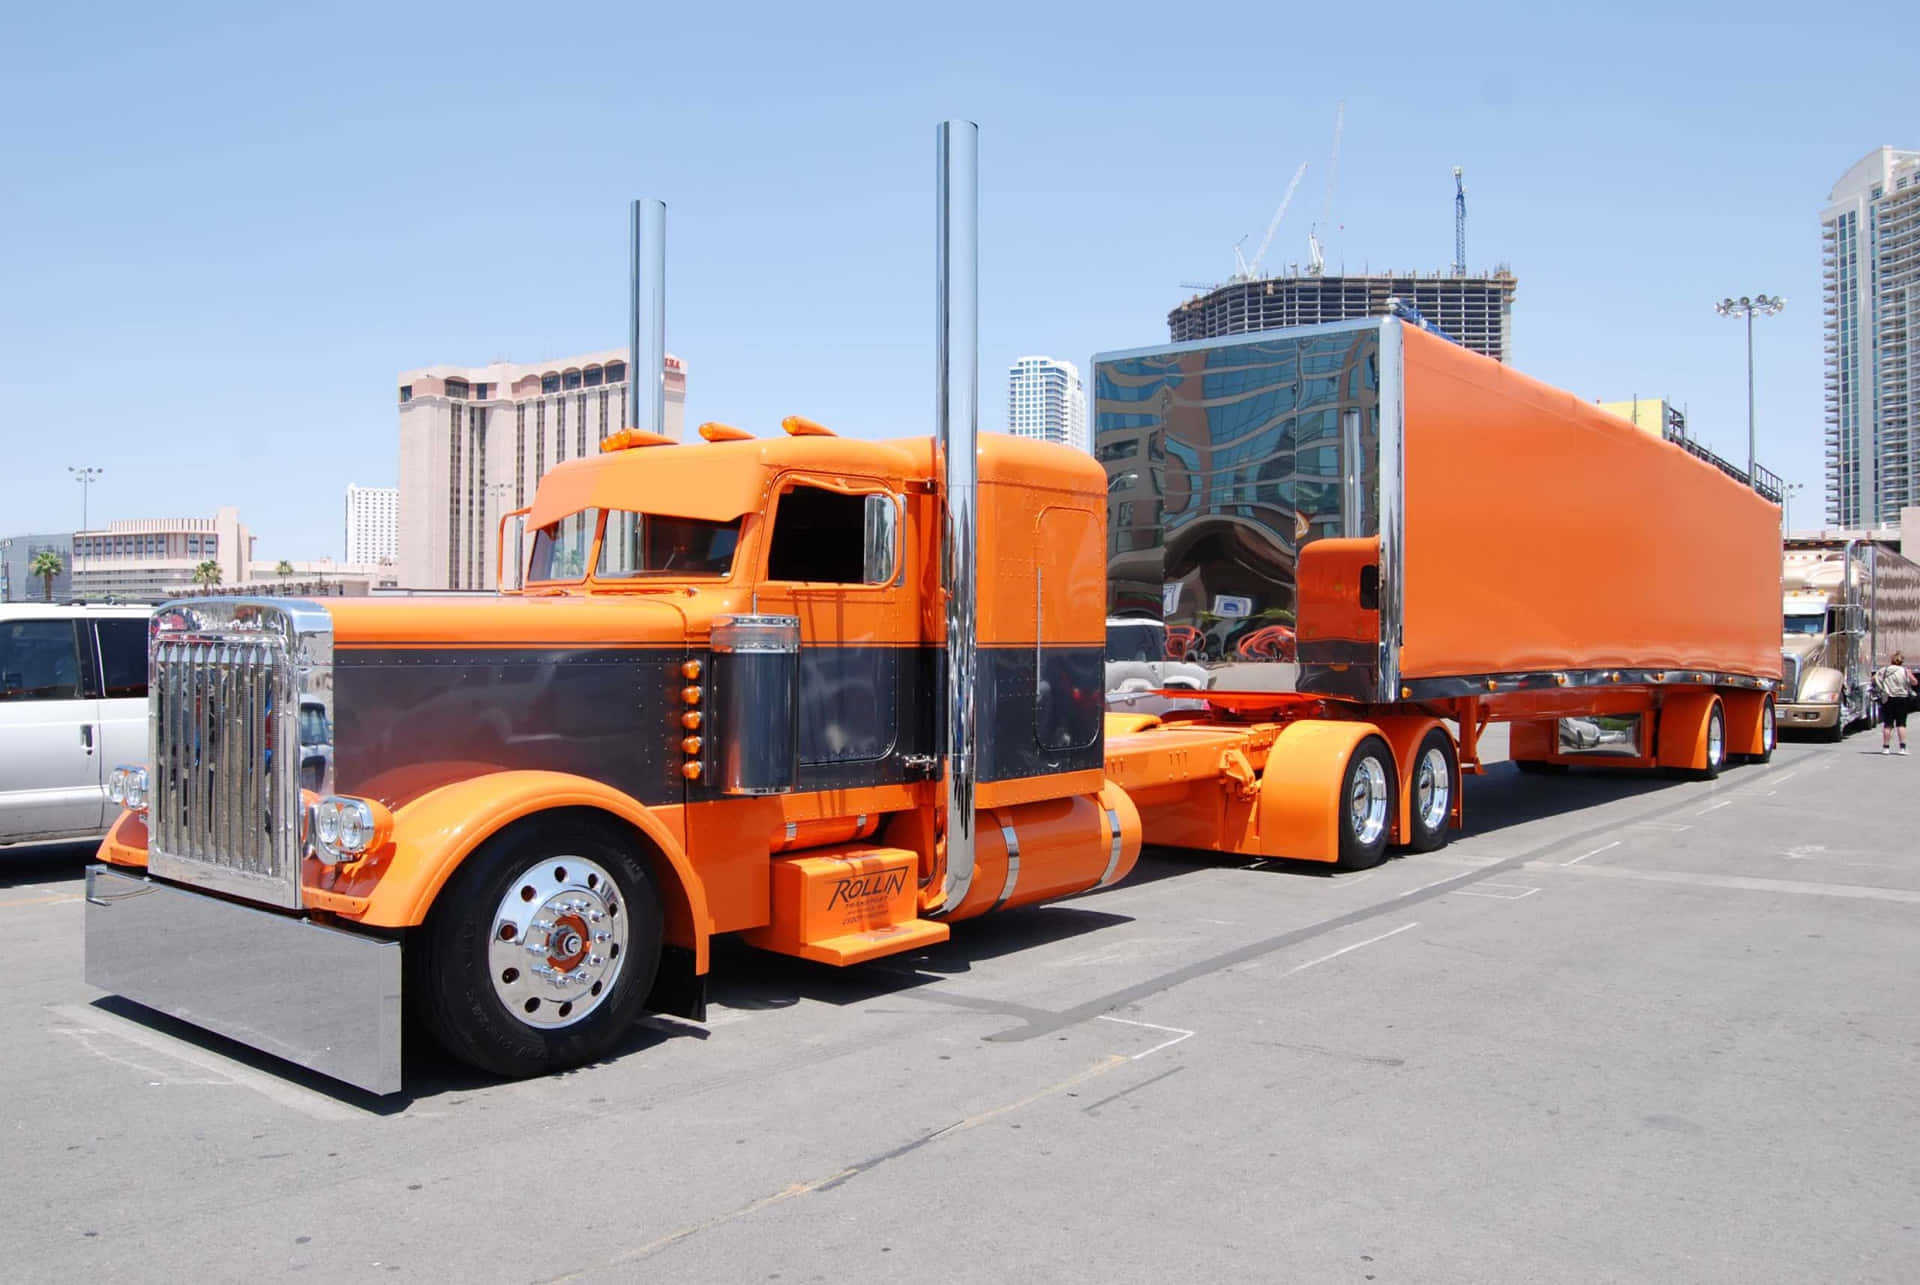 A Large Orange Truck